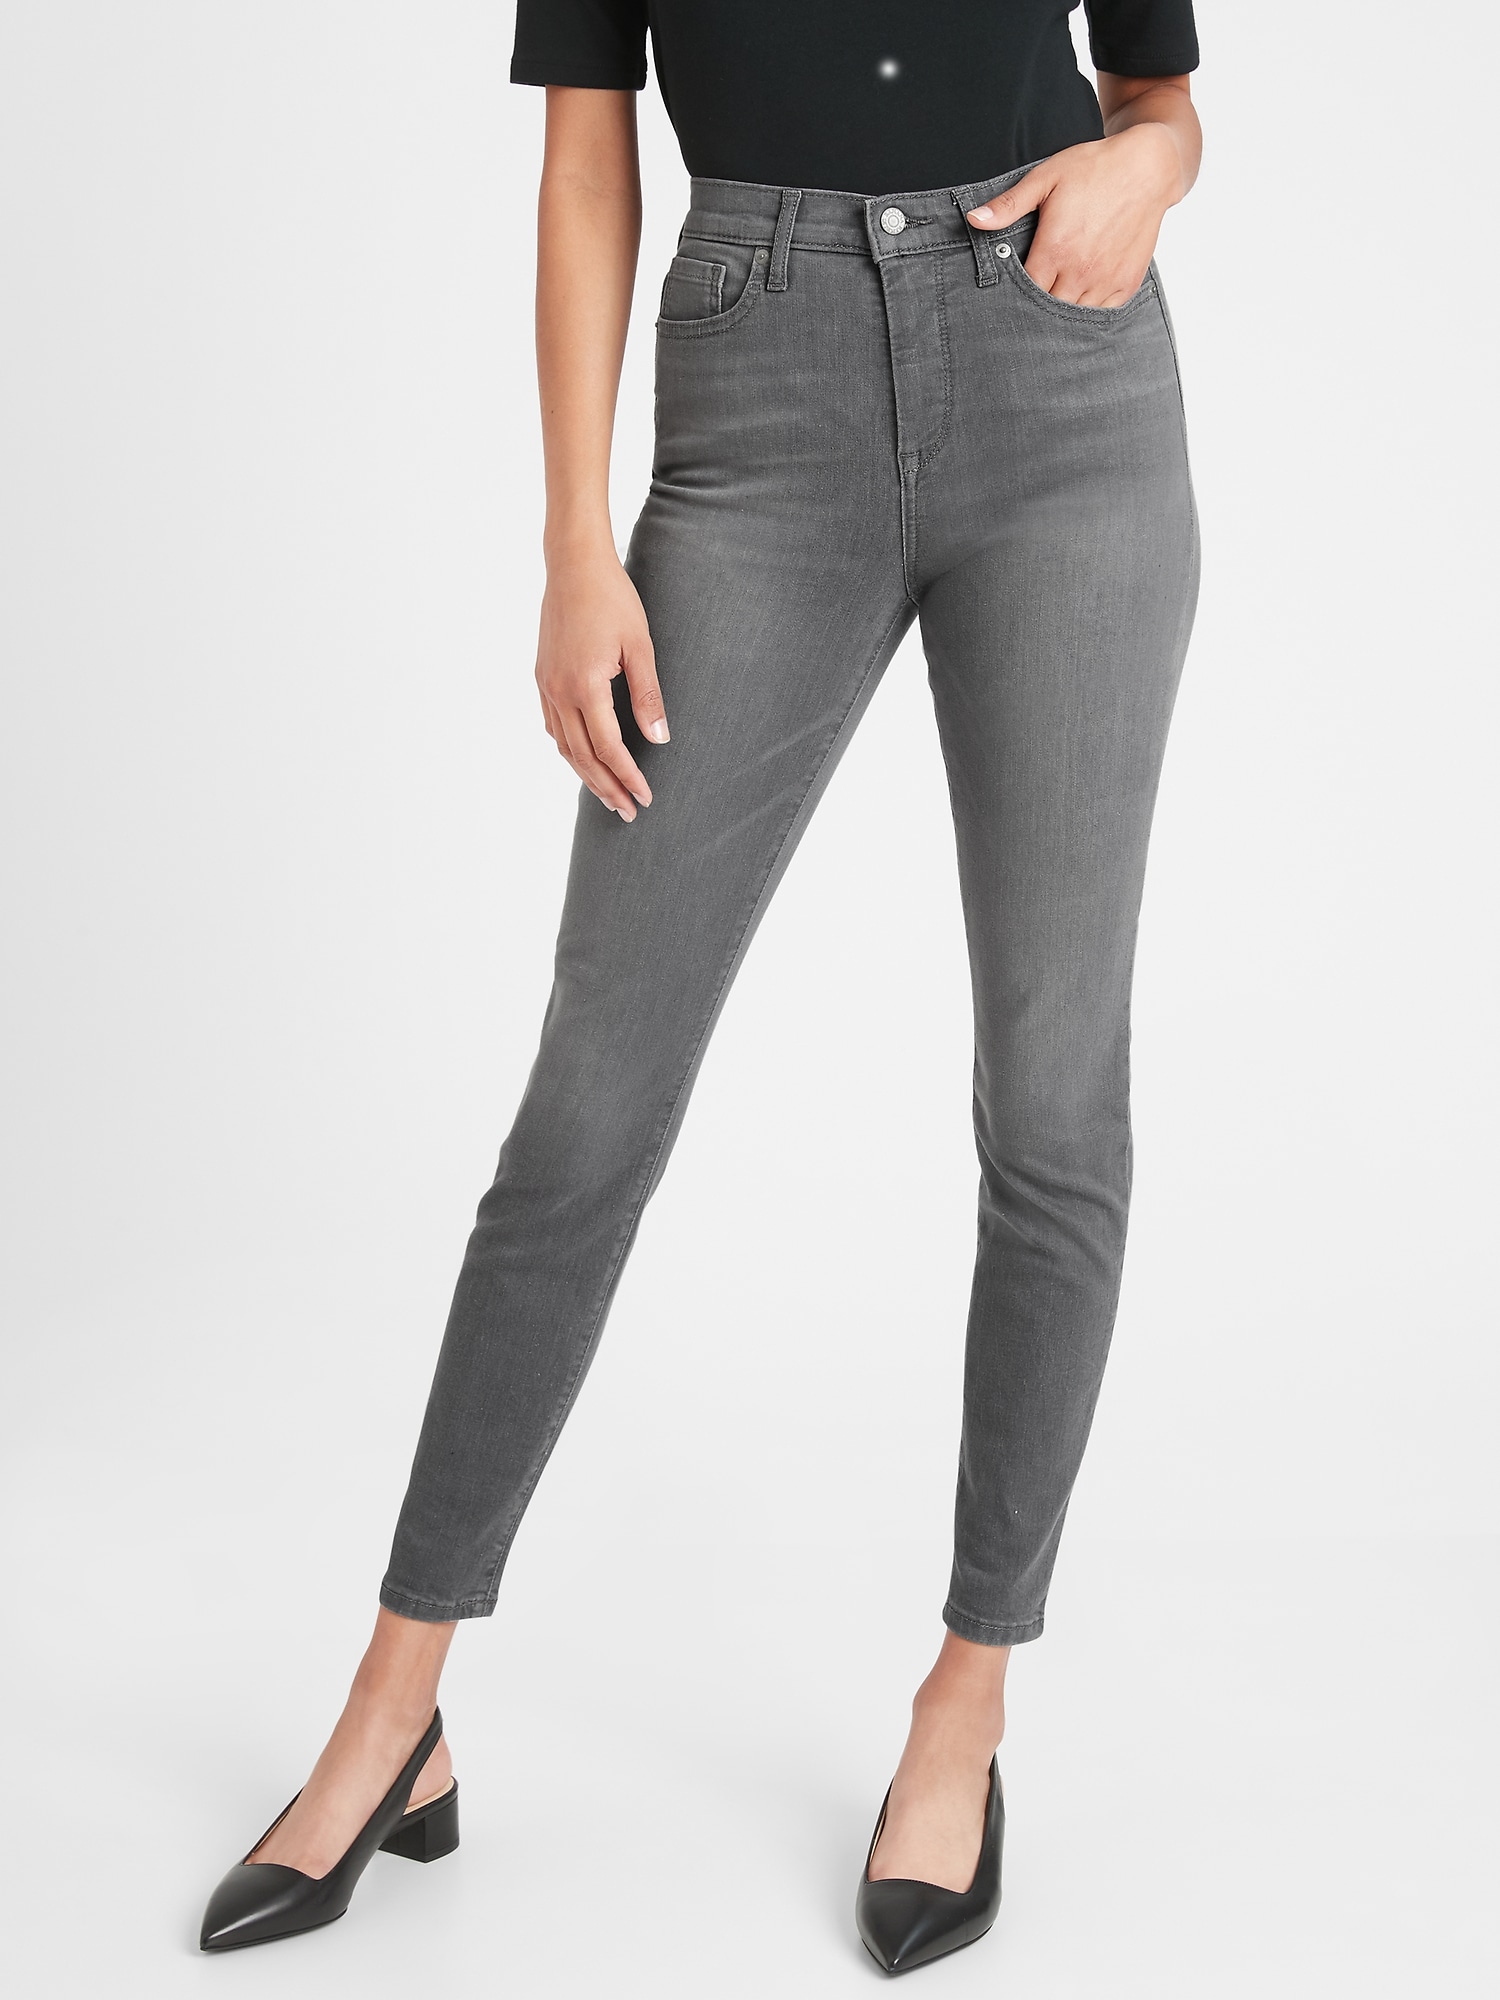 petite grey skinny jeans